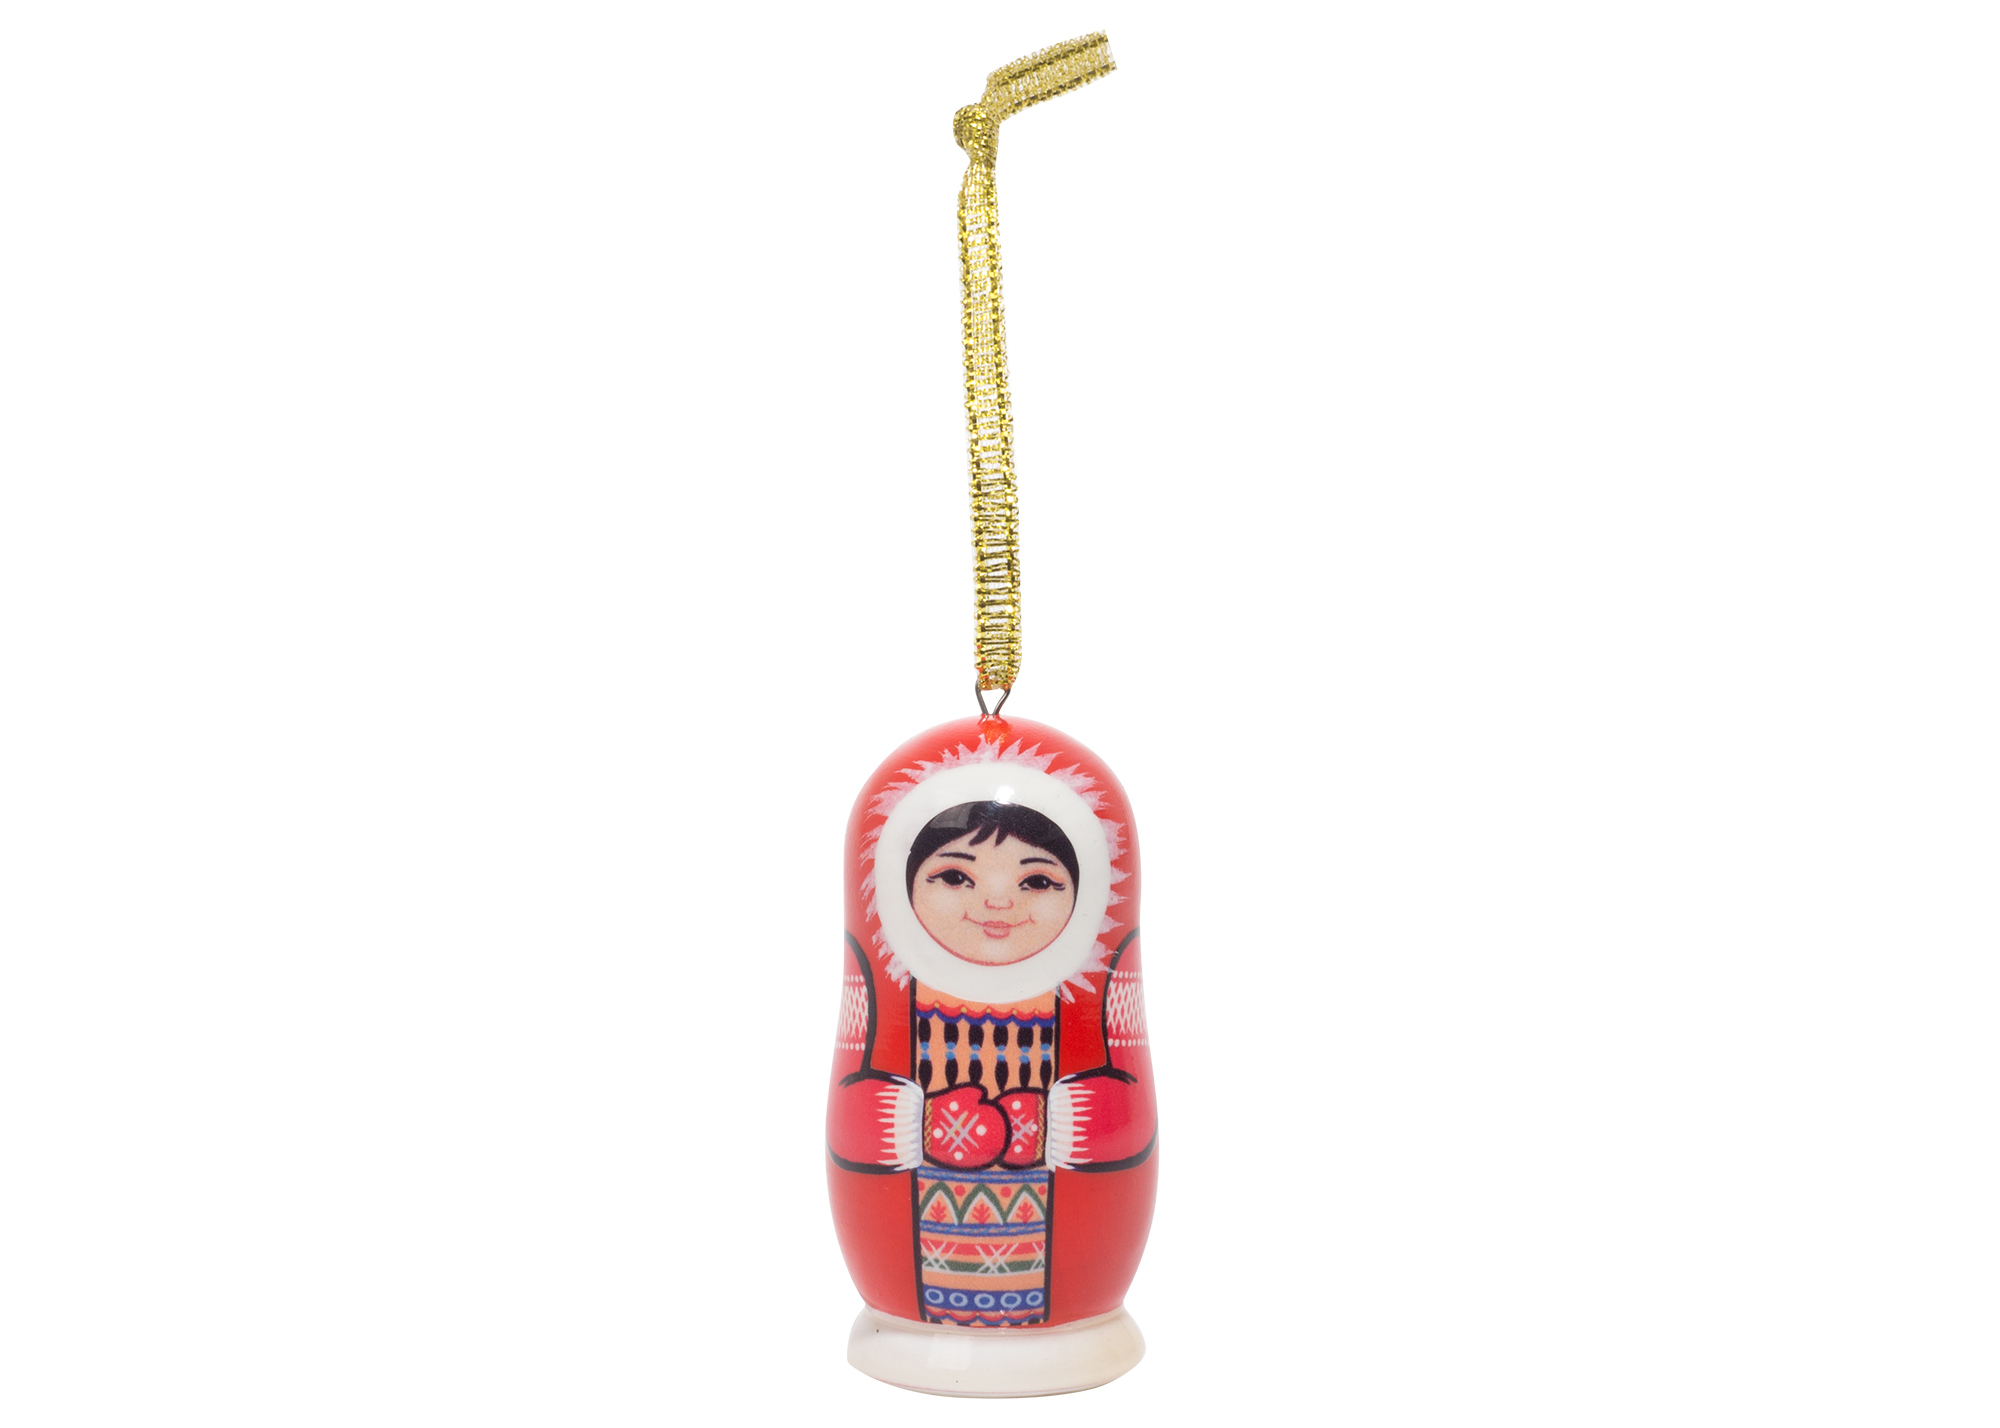 Buy Red Eskimo Ornament 2" at GoldenCockerel.com